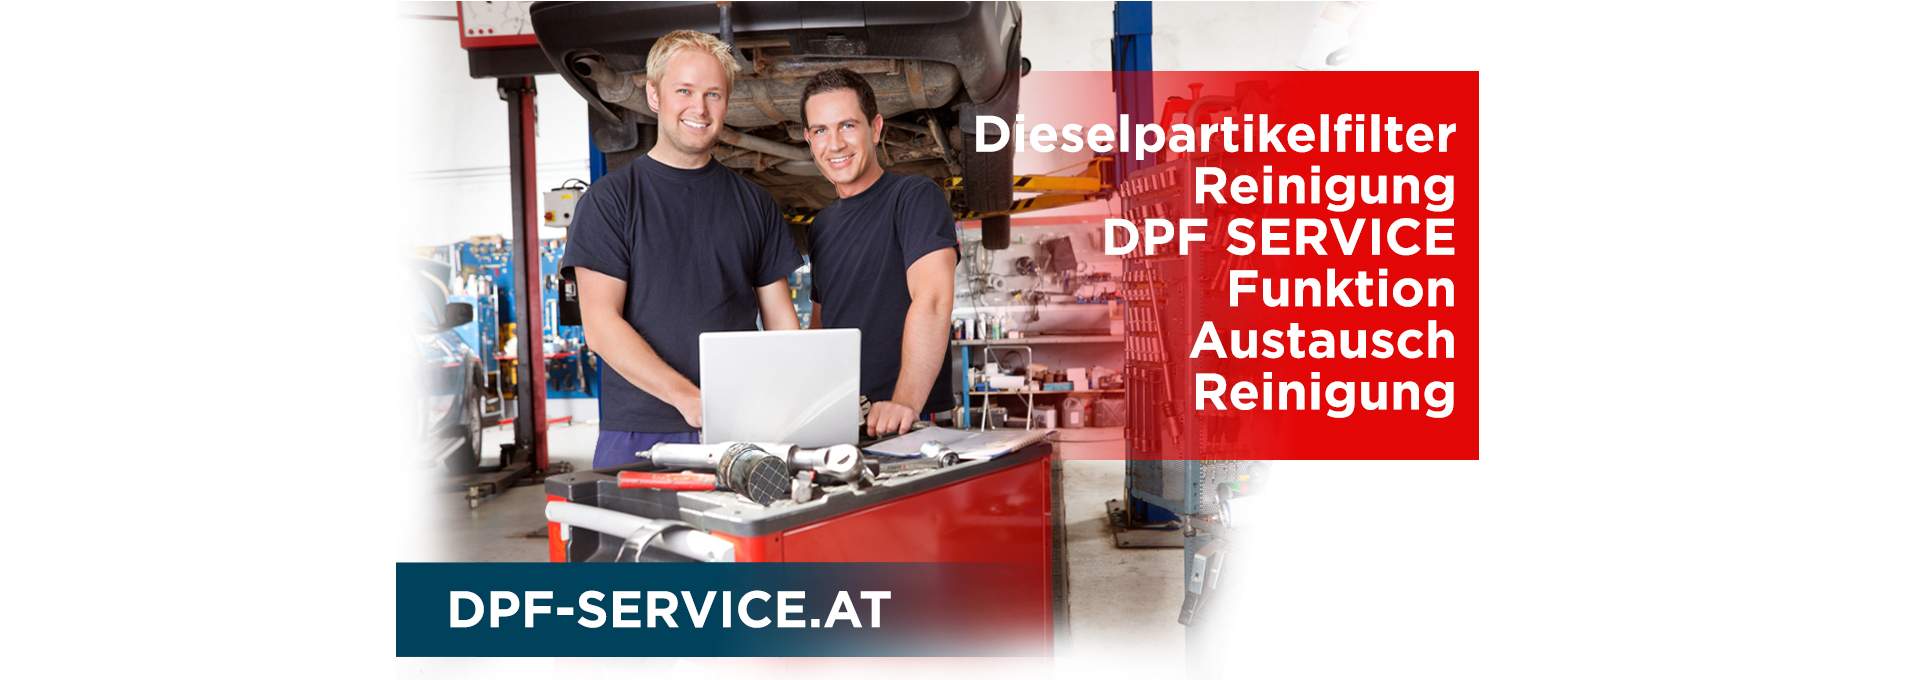 (c) Dpf-service.at